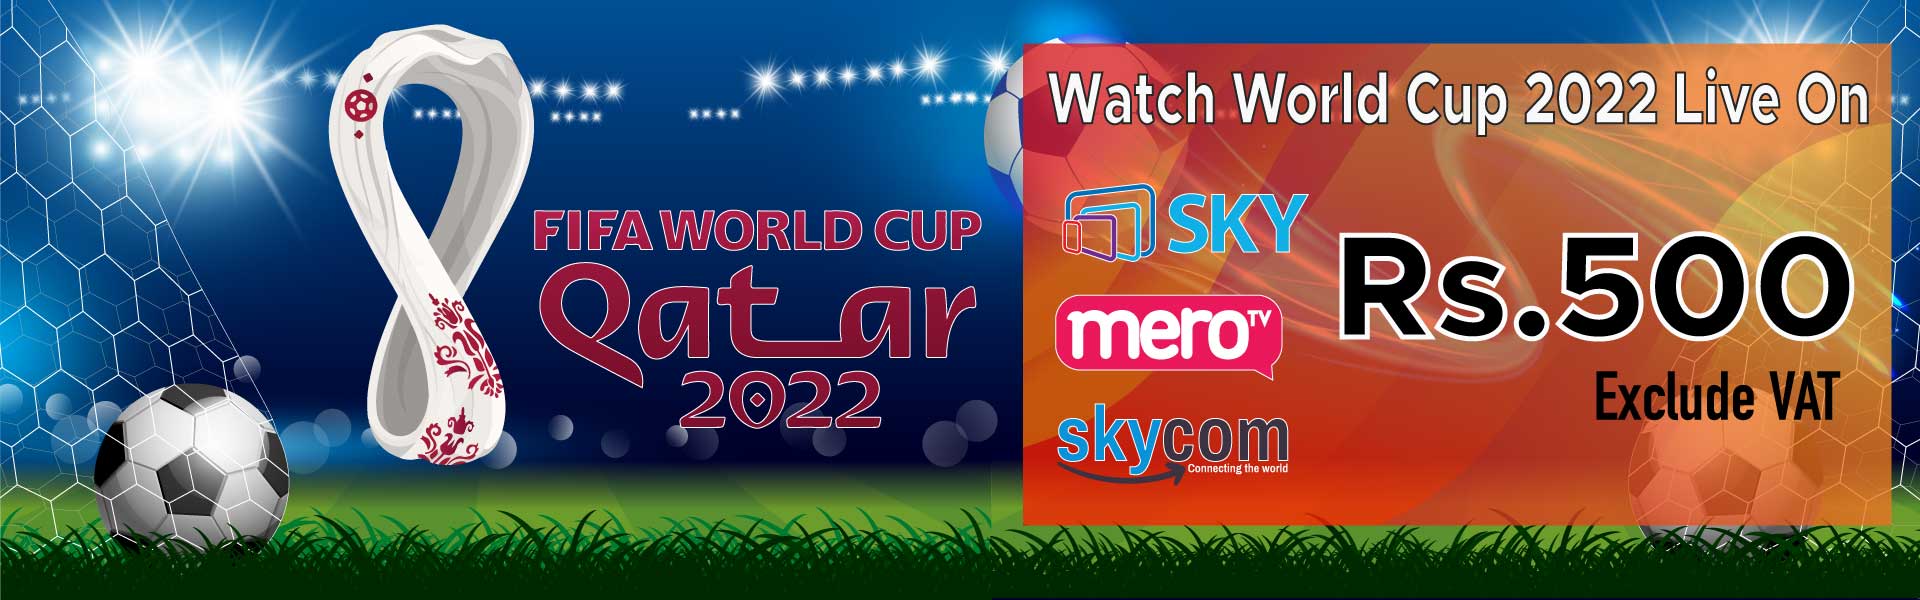 watch Qatar Football World Cup 2022 in SkyTV, MeroTV and skycom IPTV  